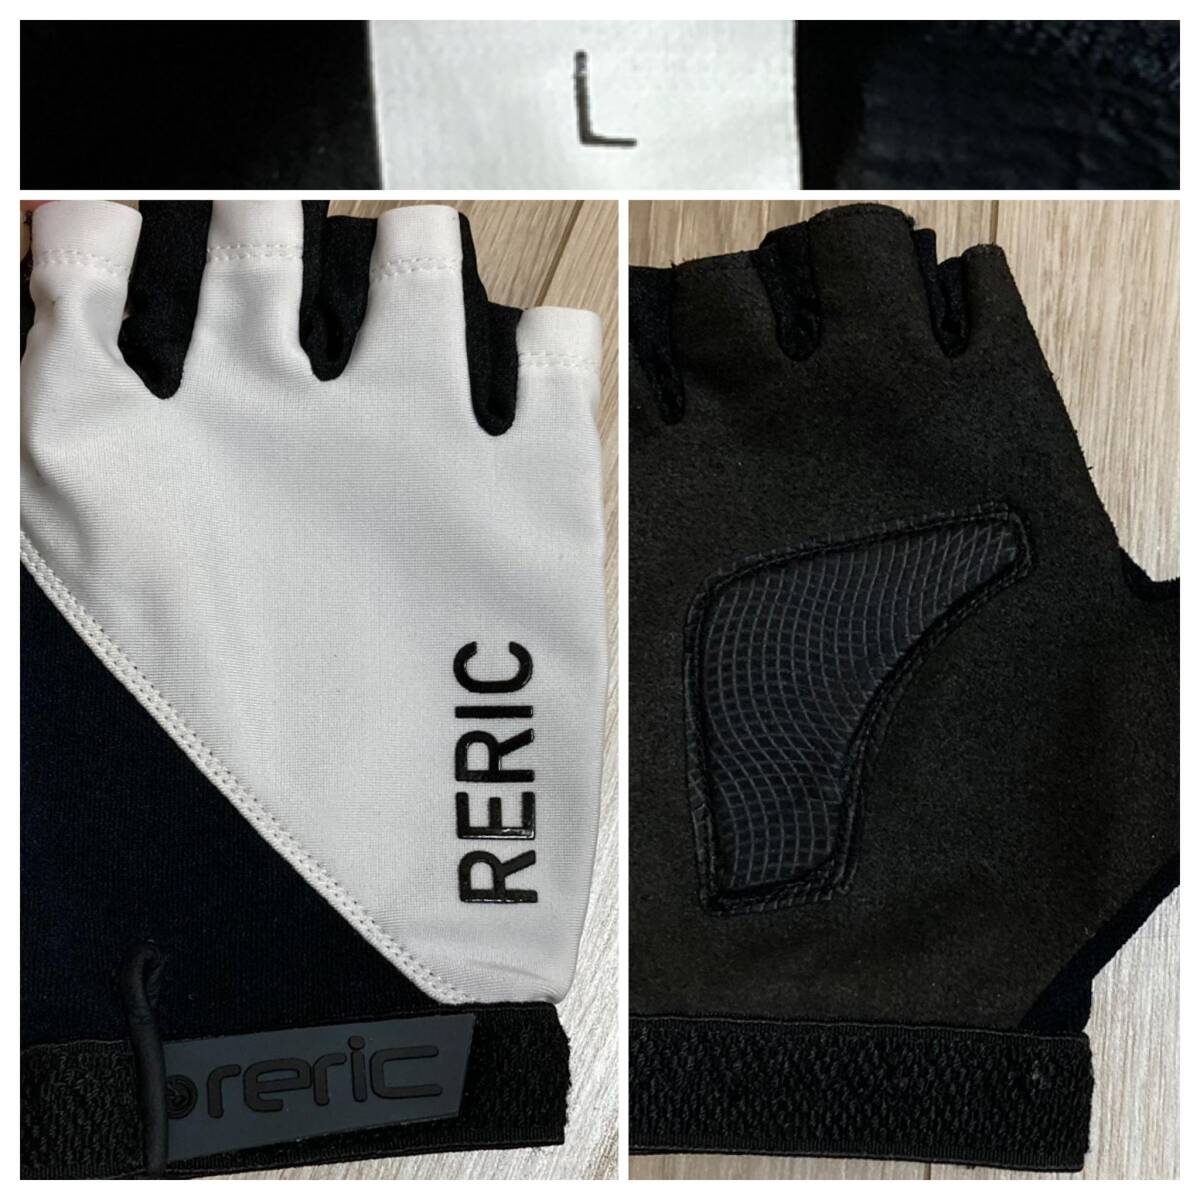  free shipping * regular reric relic L men's half finger bicycle for glove slip prevention attaching gloves reric brand Logo good quality goods n112 white × black 